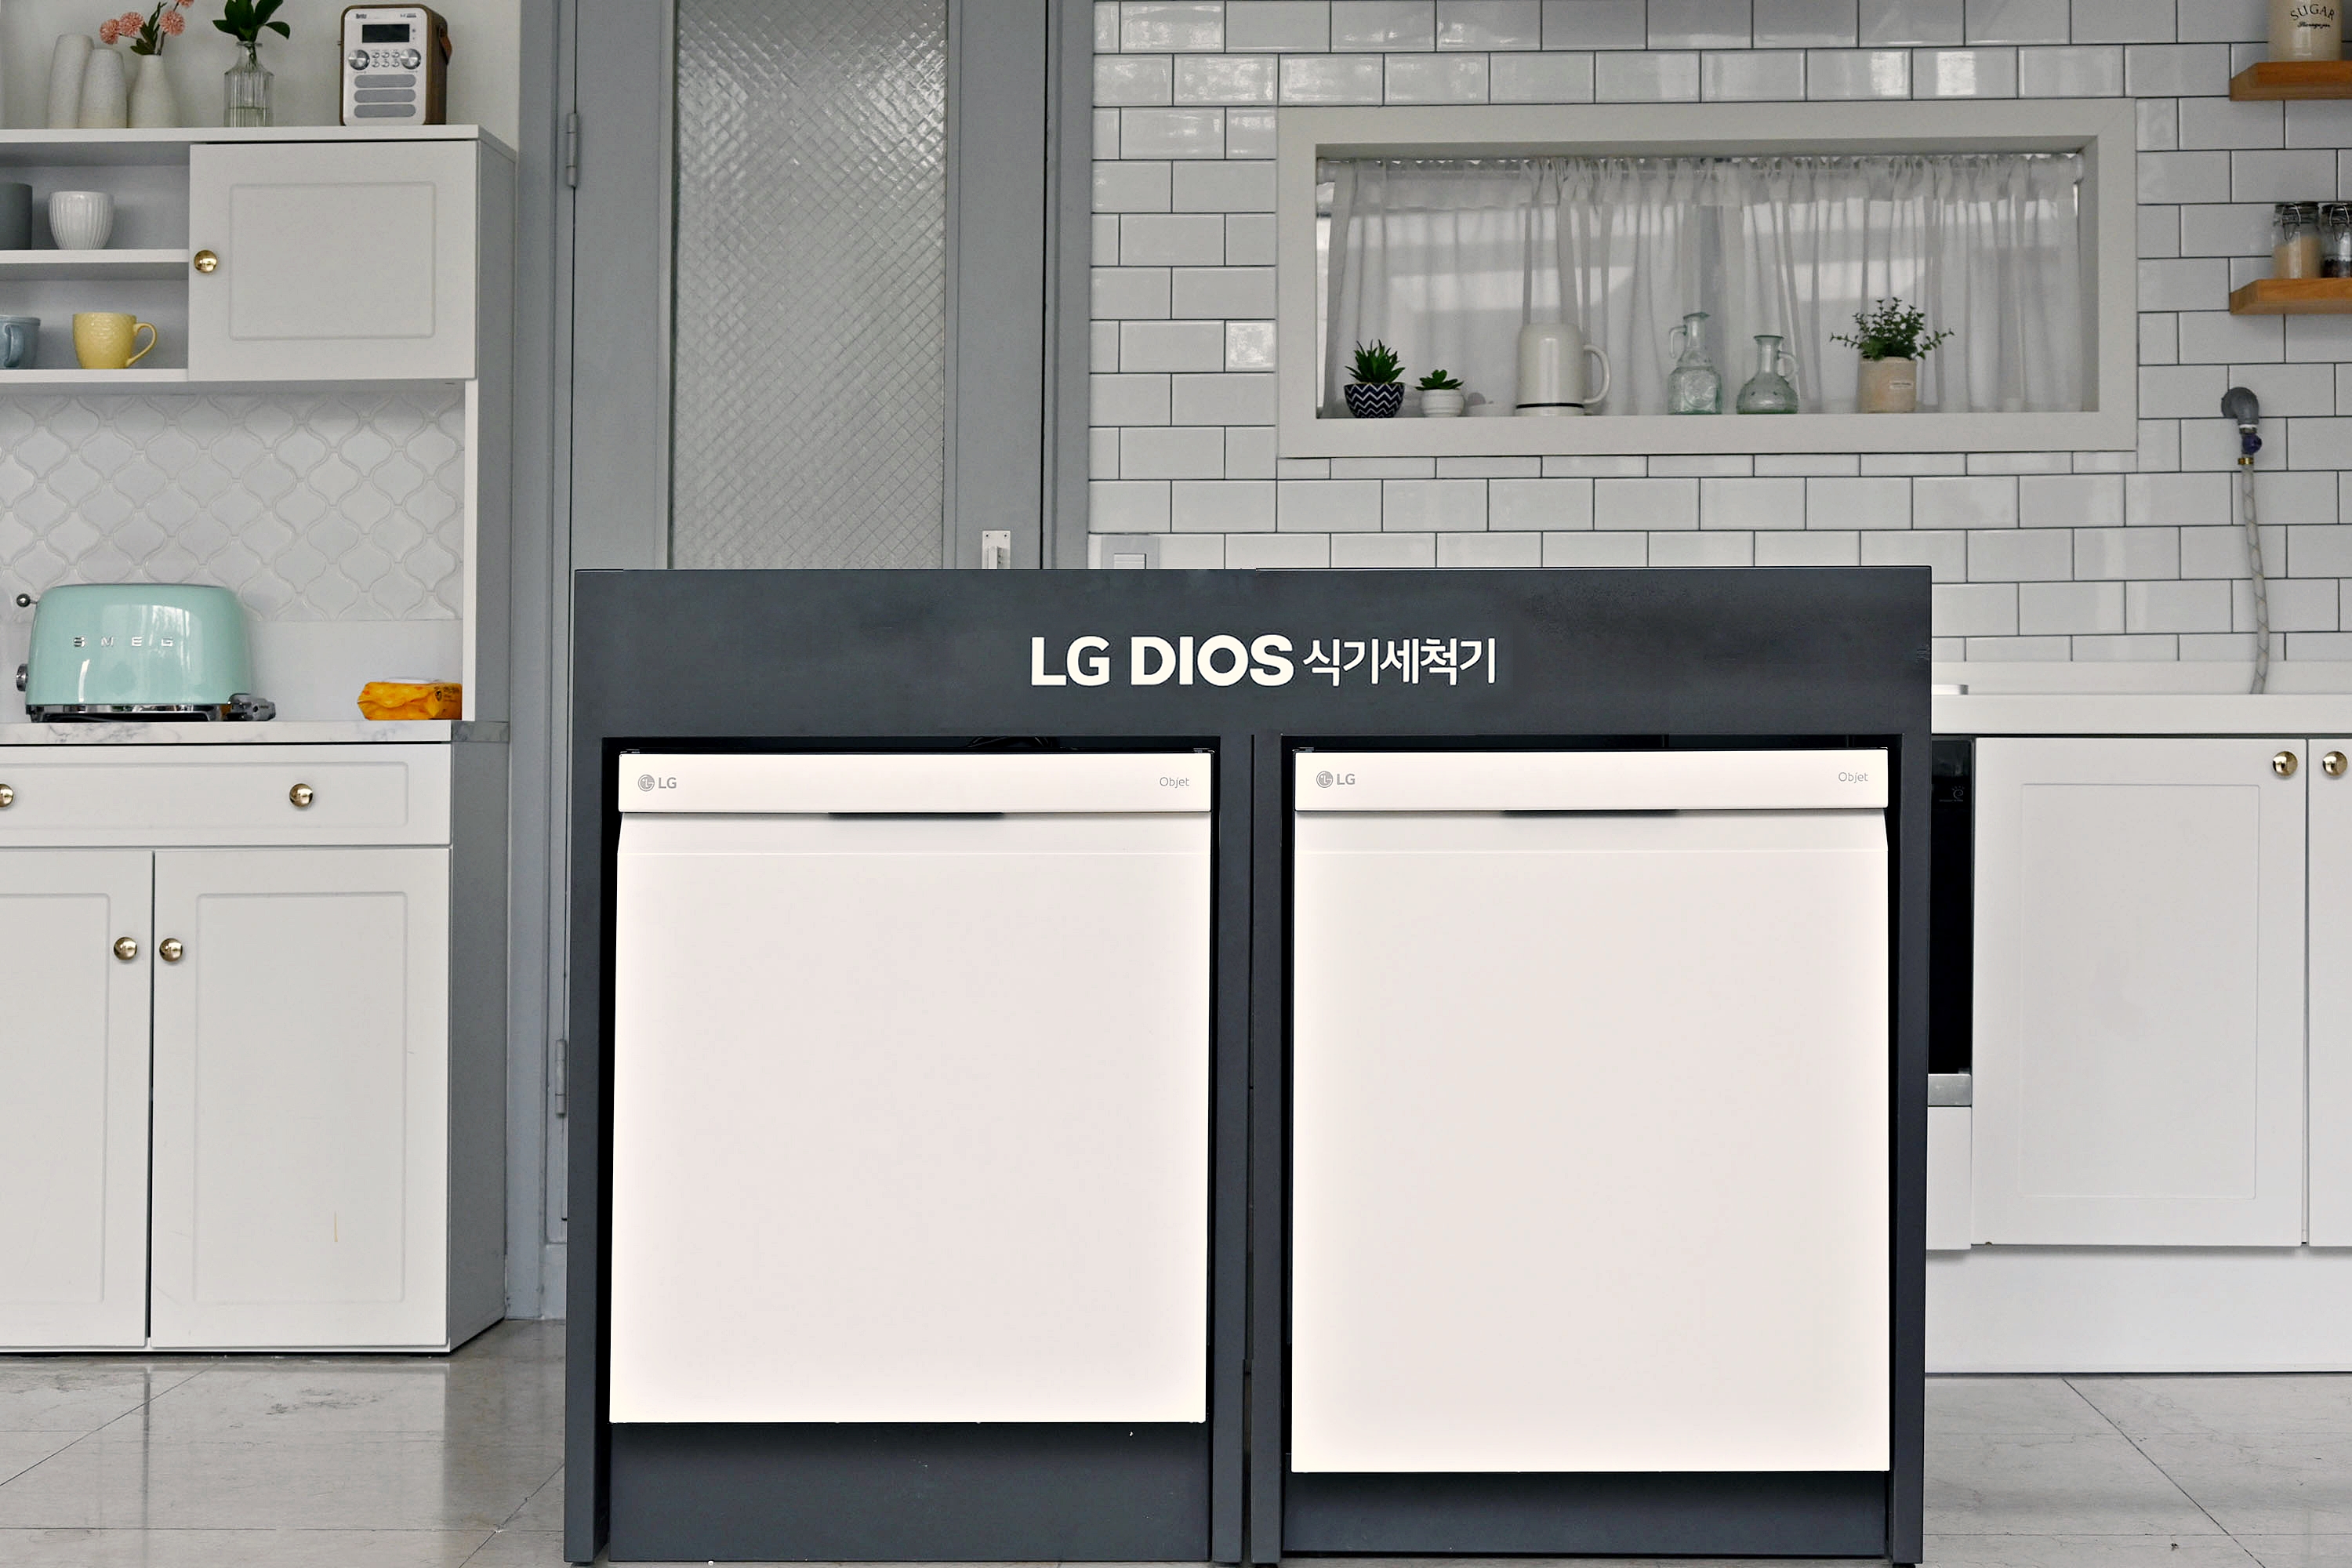 LG전자가 26일 출시하는 LG 디오스 식기세척기 14인용 신제품(오른쪽)이 기존 12인용 제품과 나란히 전시돼 있다. 신제품은 기존제품에 비해 하단부 높이가 낮아, 최근 인테리어 추세를 따랐다. LG전자 제공